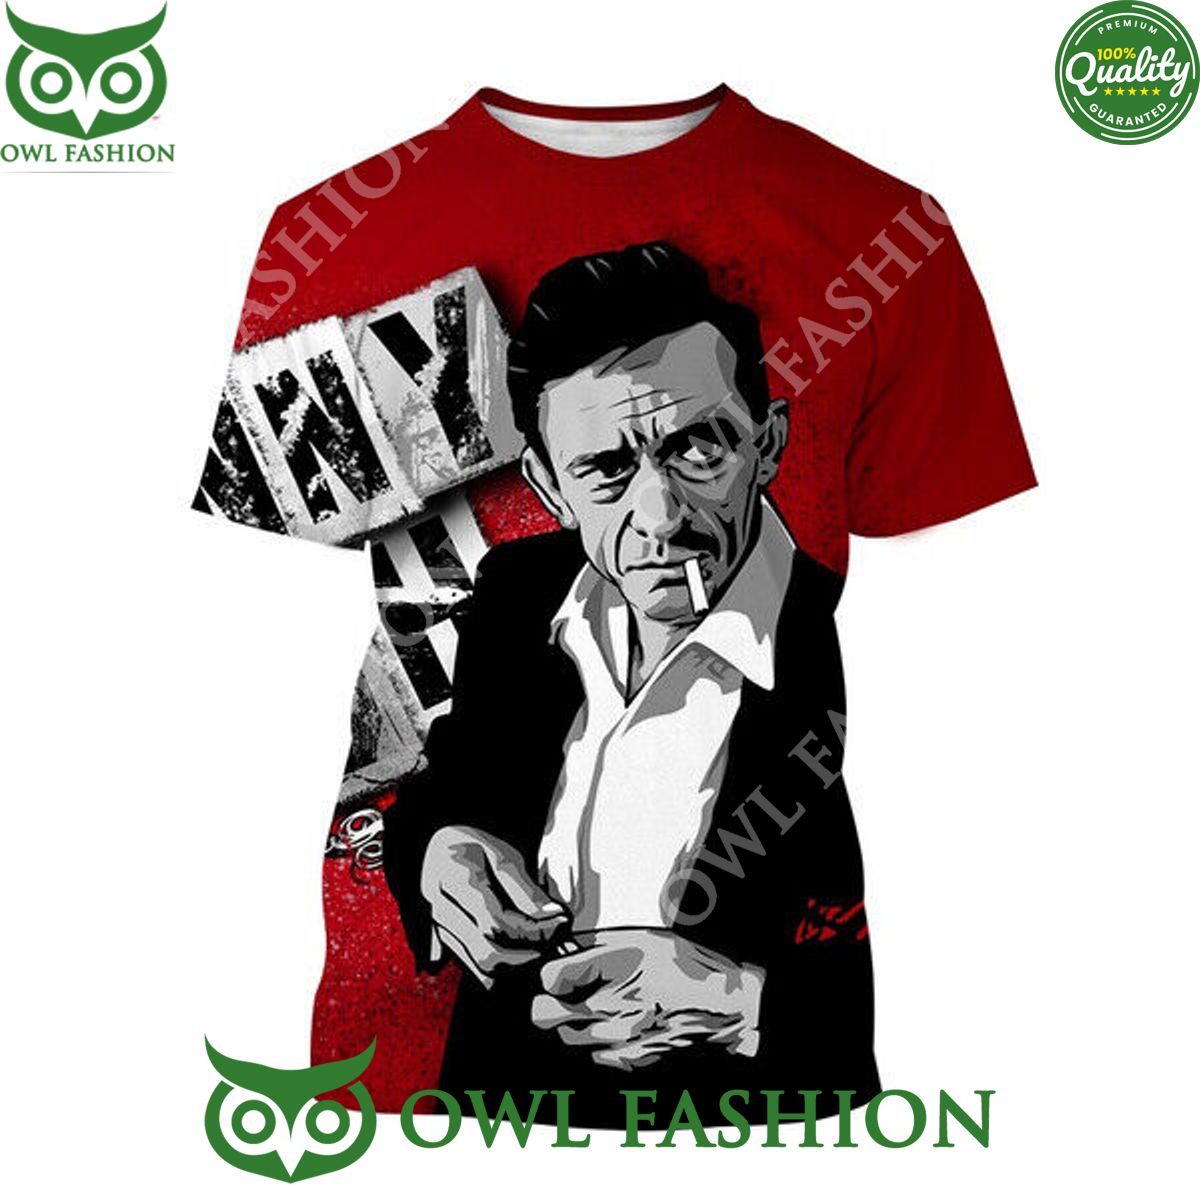 Johnny Cash Smoking Black for the Man in black t shirt